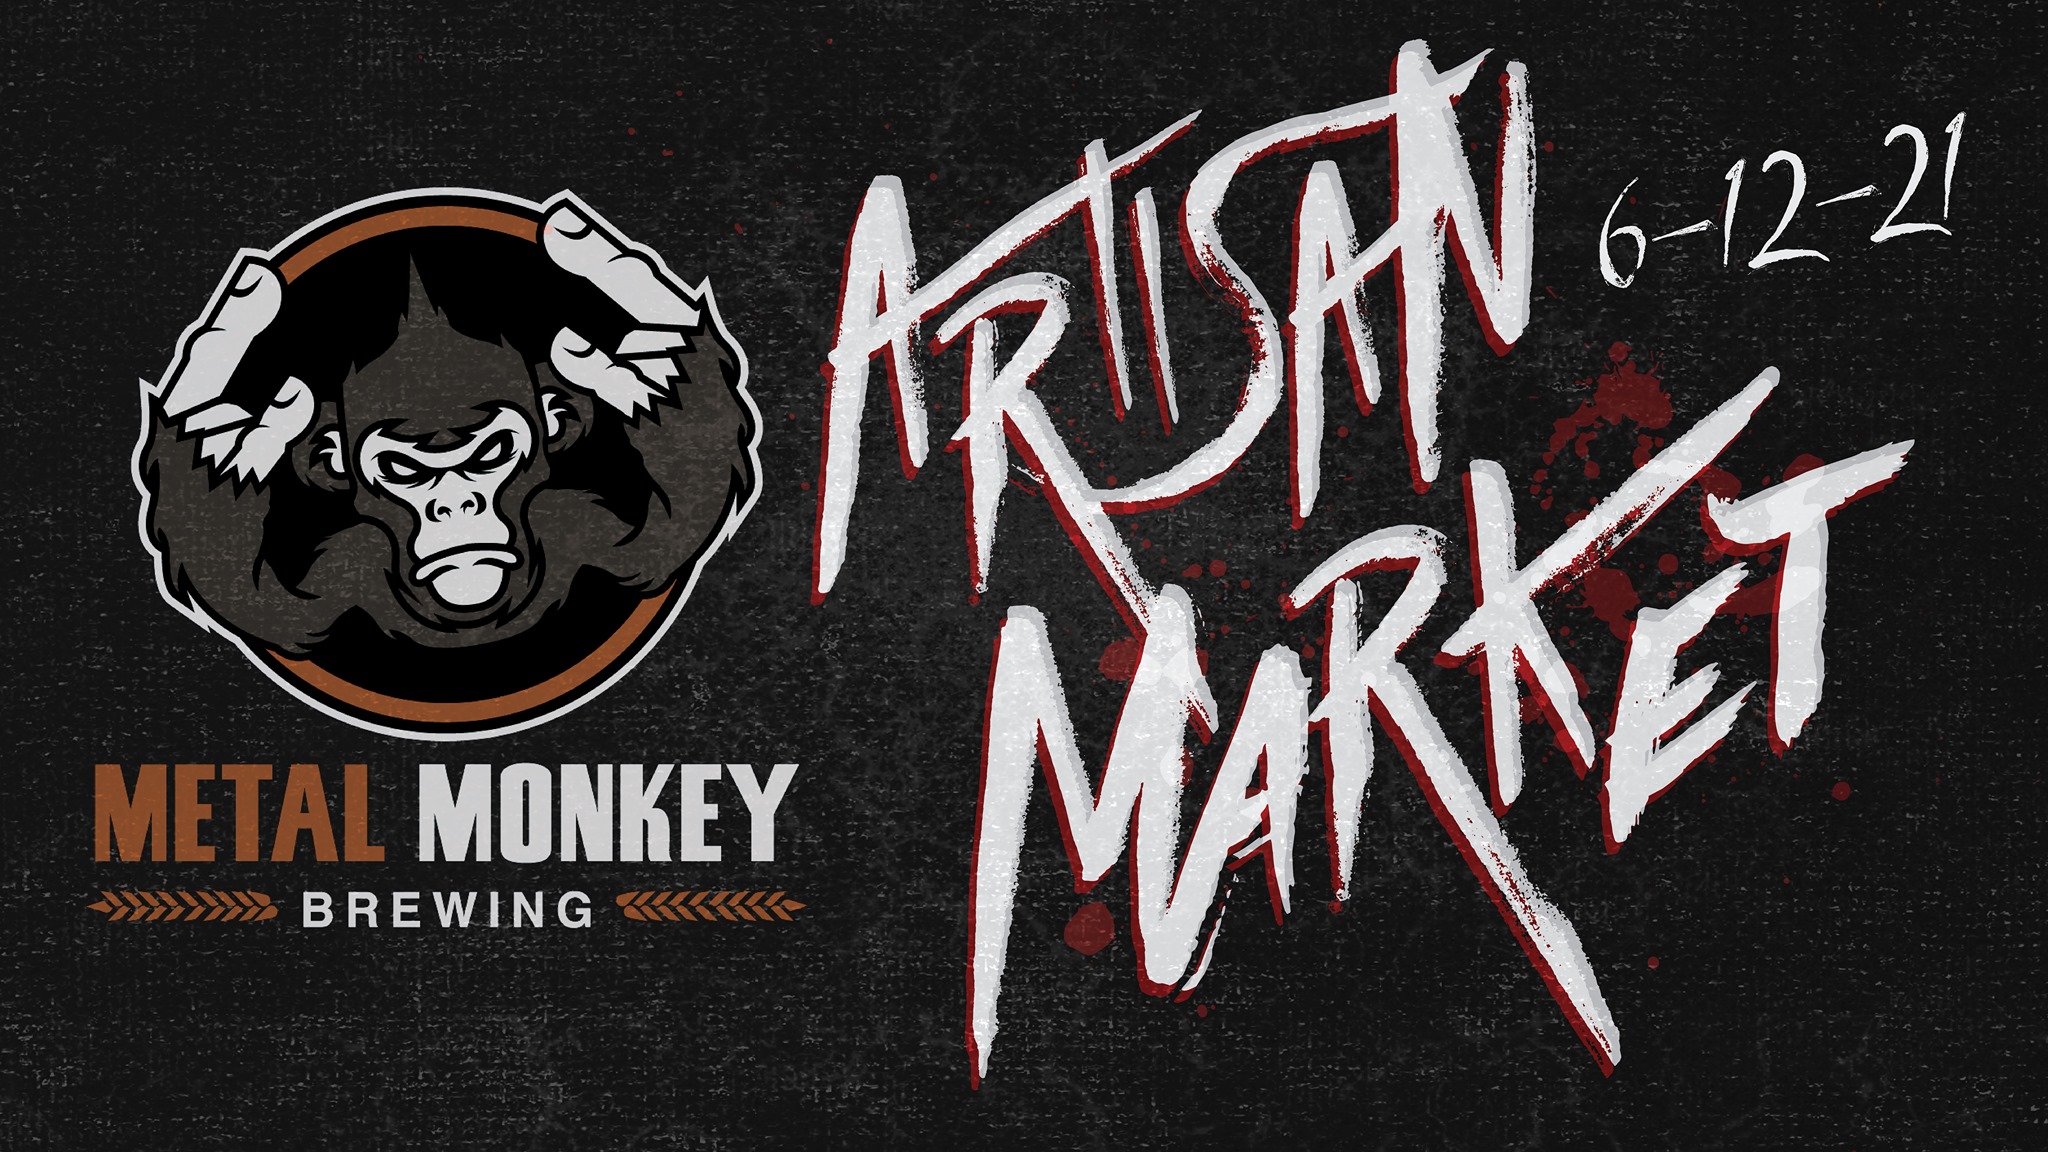 Graphic for Metal Monkey's Artisan Market